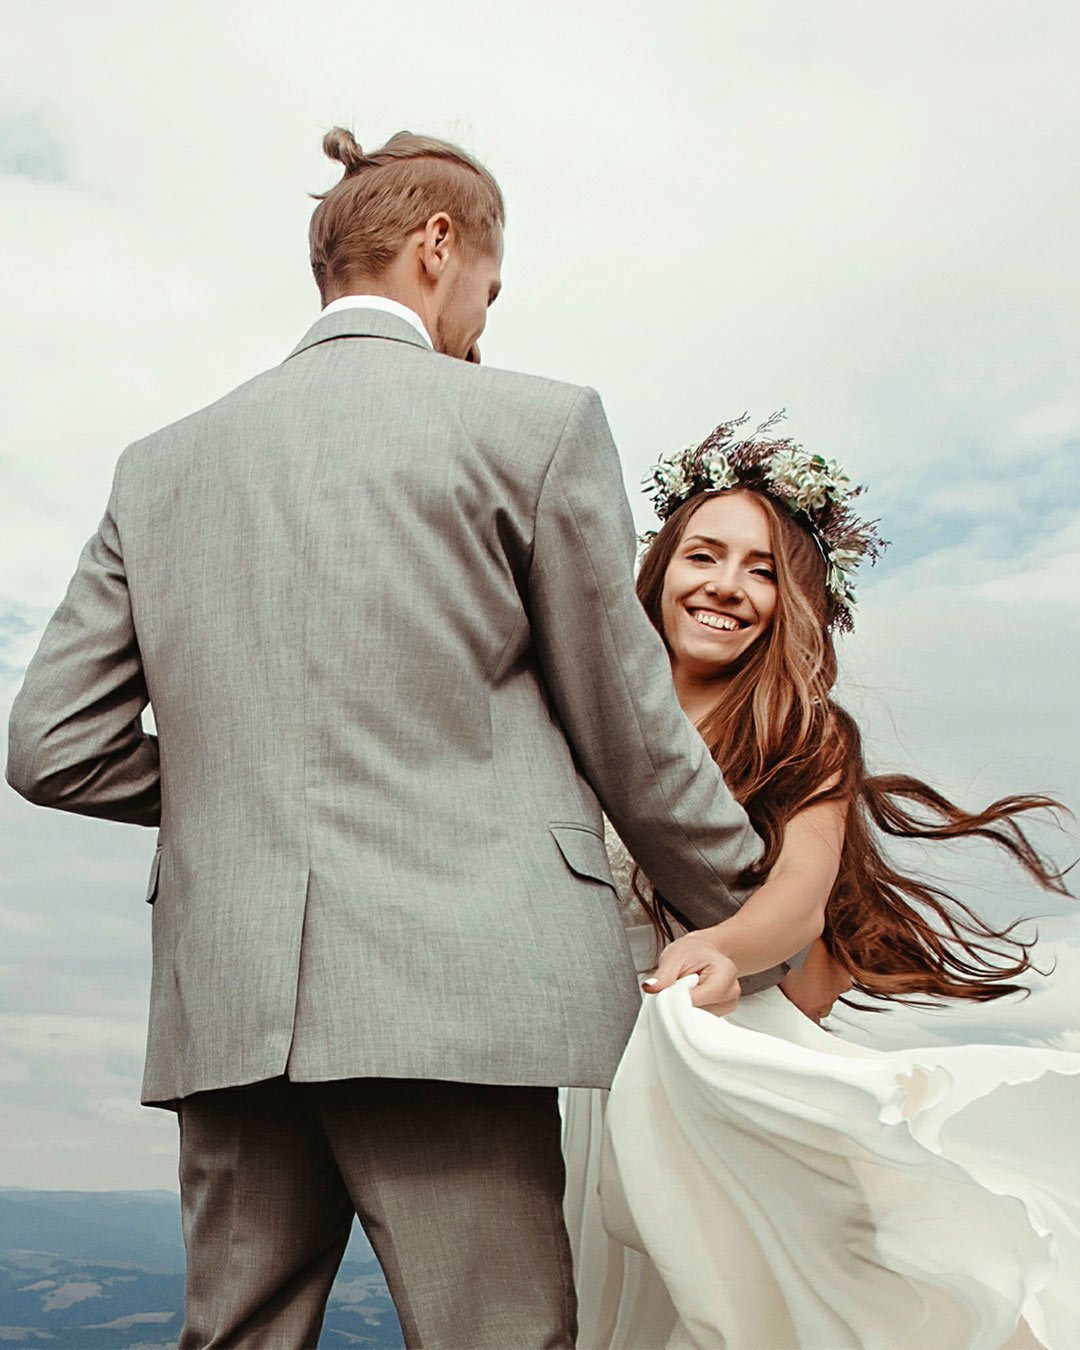 https://www.weddingforward.com/wp-content/uploads/2021/03/native-american-wedding-blessing-bride-groom-dance.jpg